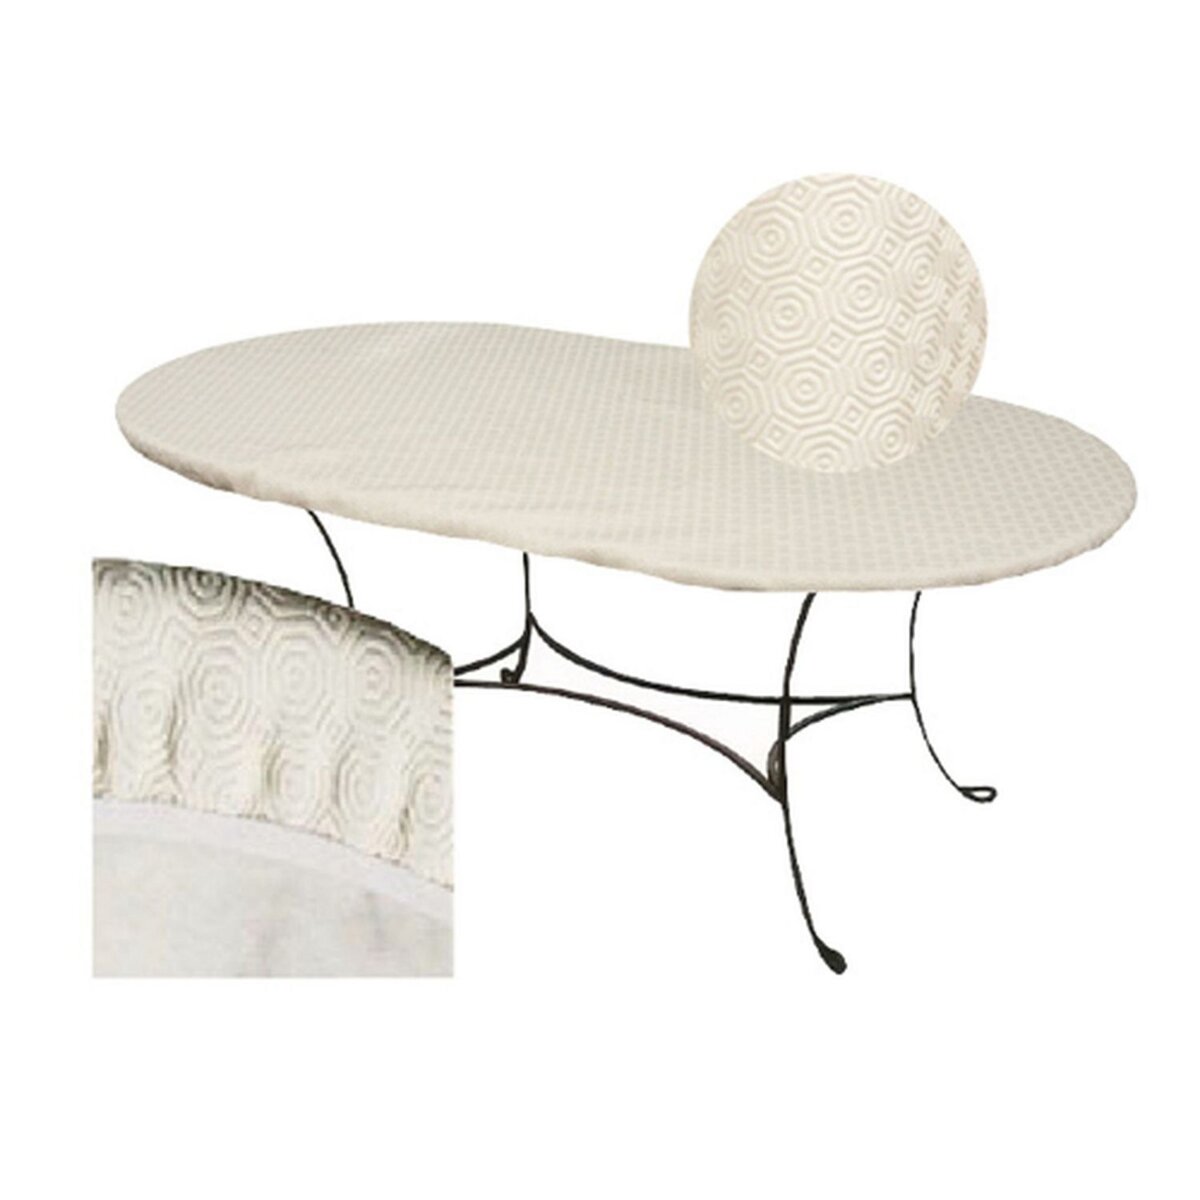 HABITABLE Sous-nappe protège table ovale Basic - L. 125 x l. 195 cm - Blanc